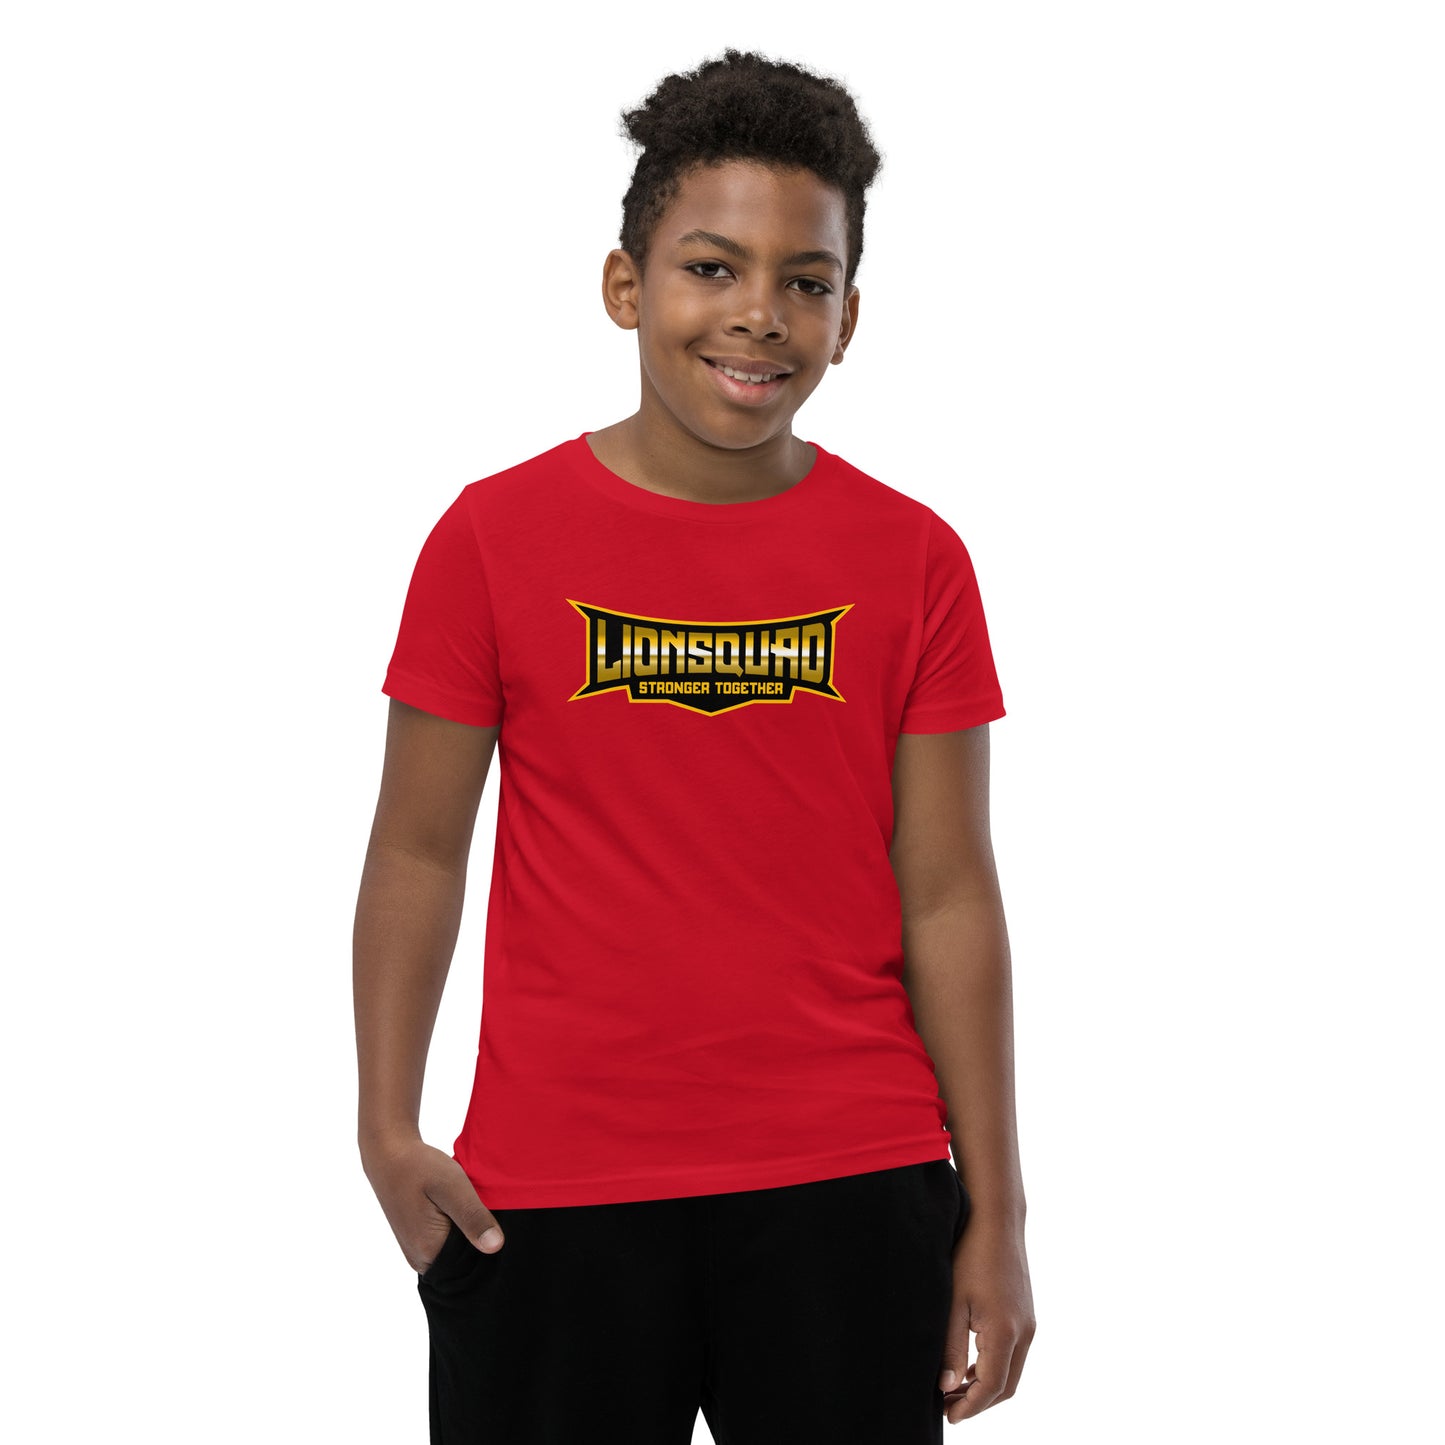 Youth Short Sleeve T-Shirt - LionSquad